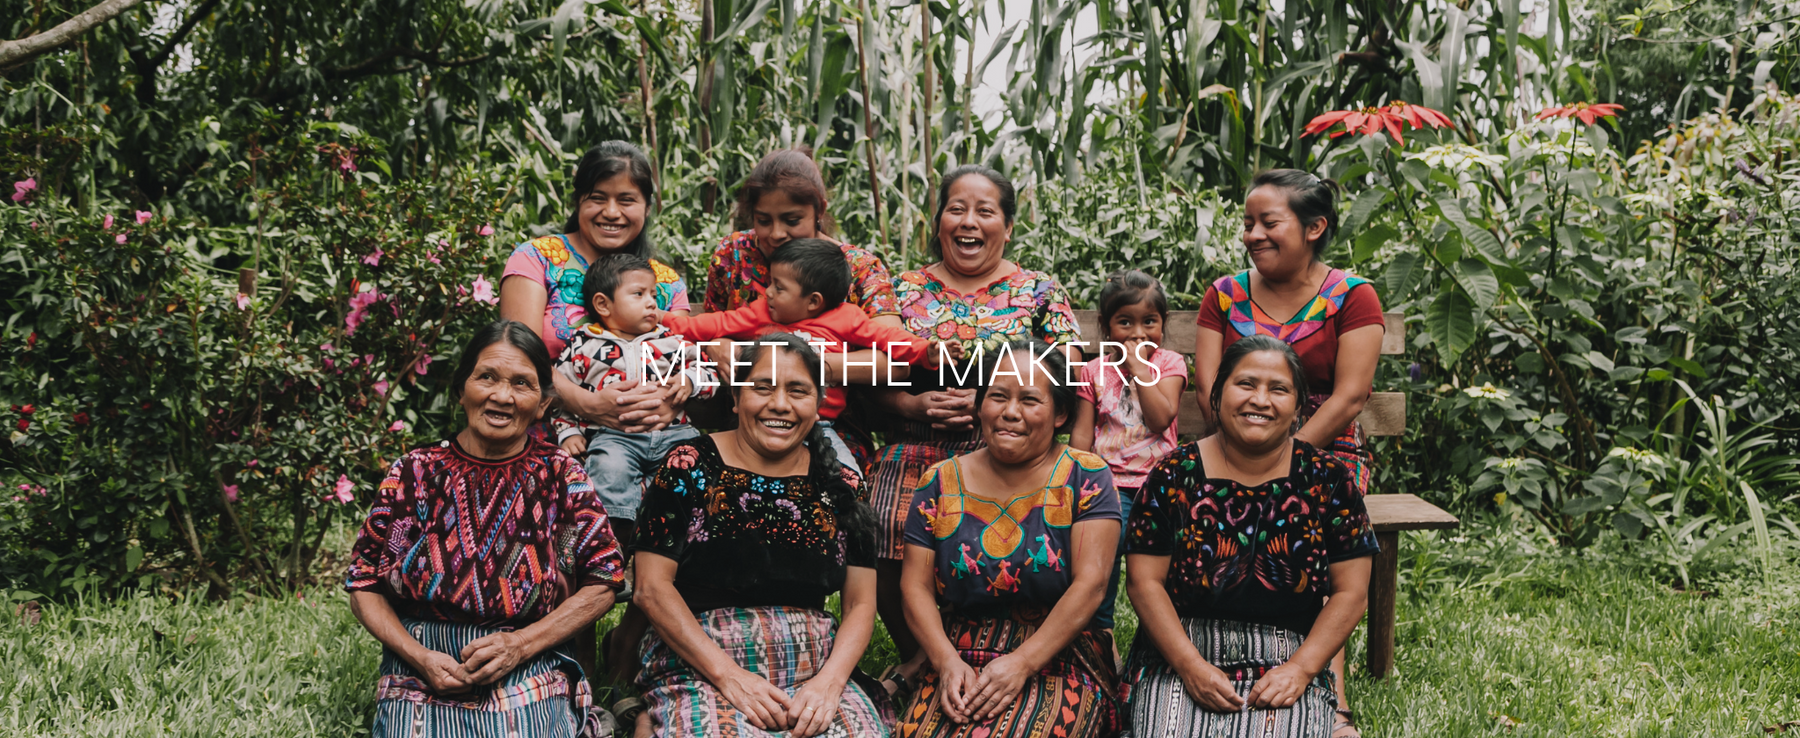 indigenous female artisans in Guatemala empowered through sustainable work